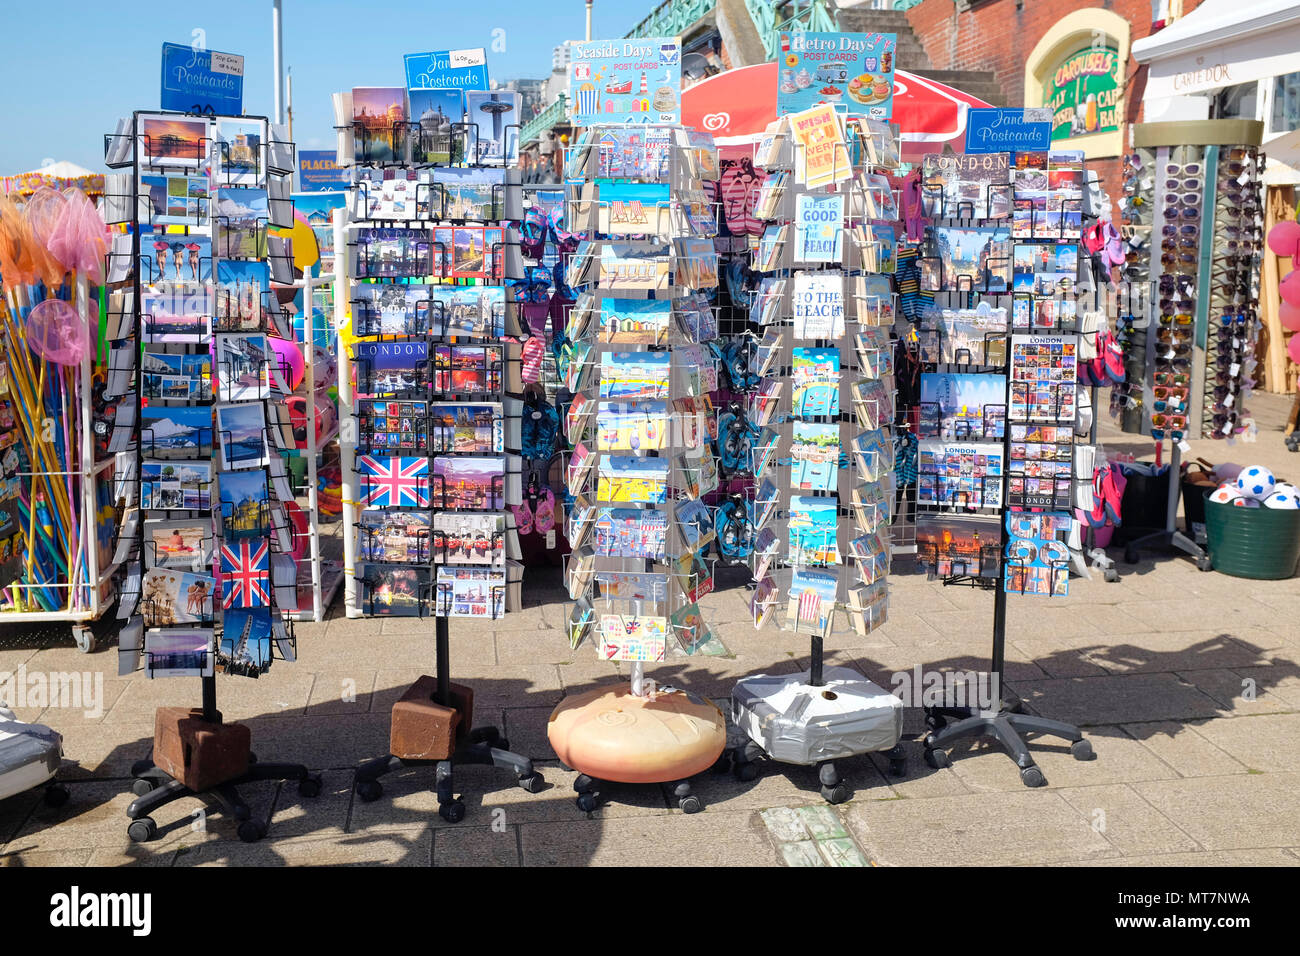 Souvenir stalls on beach promenade, Kings Road Arches, Brighton, East Sussex, England, United Kingdom Stock Photo